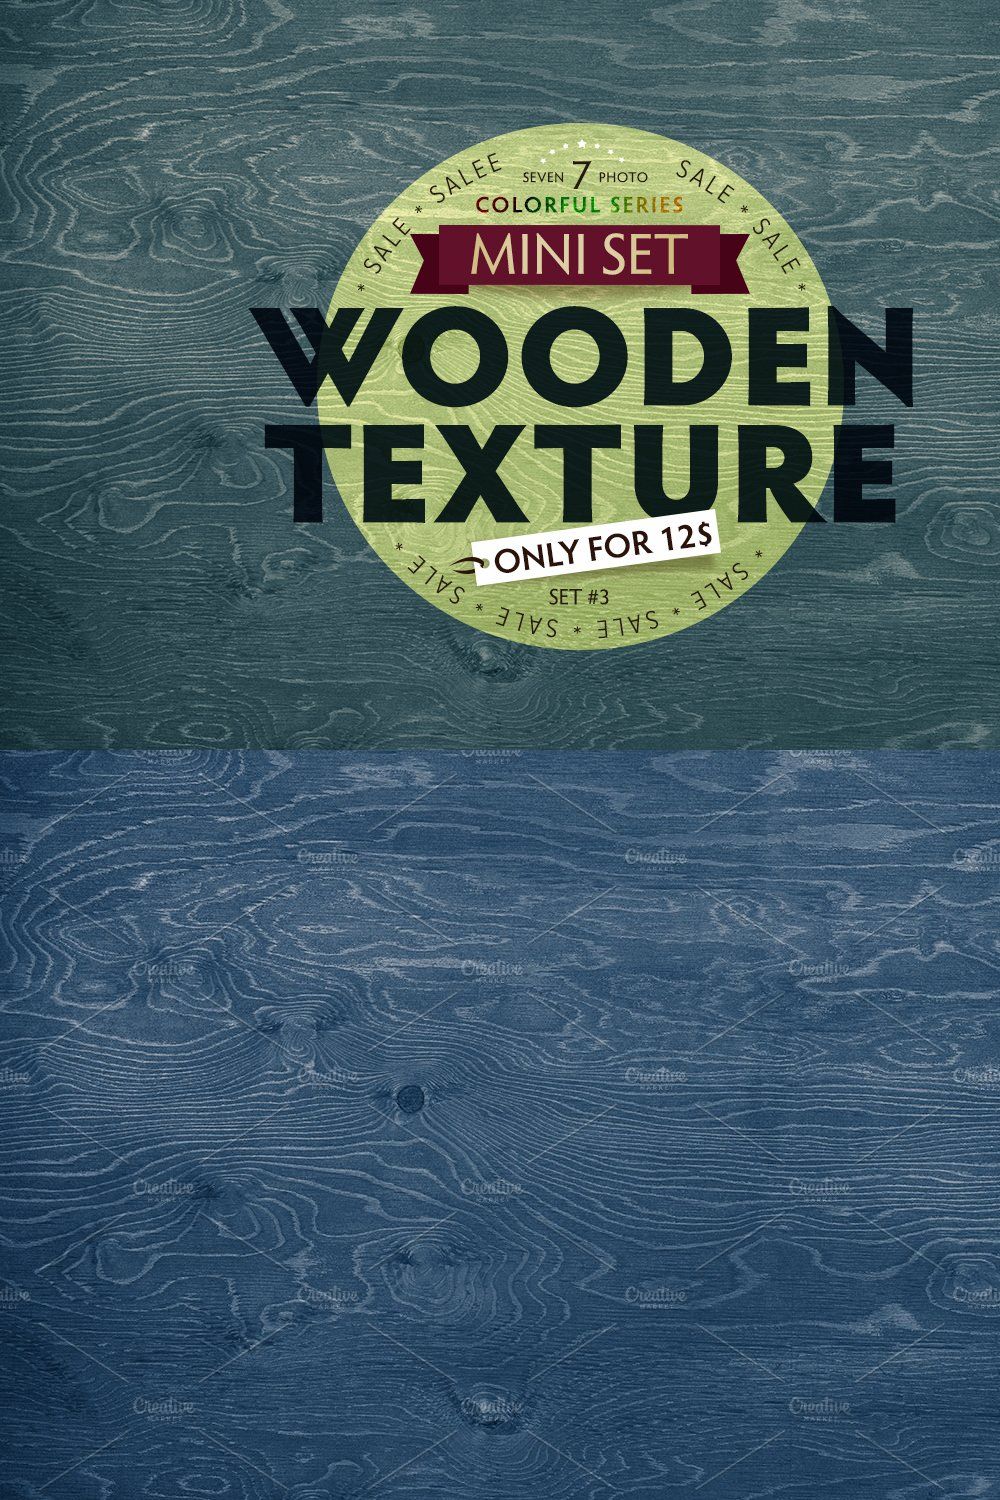 Colorful Wood Texture Set #3 pinterest preview image.